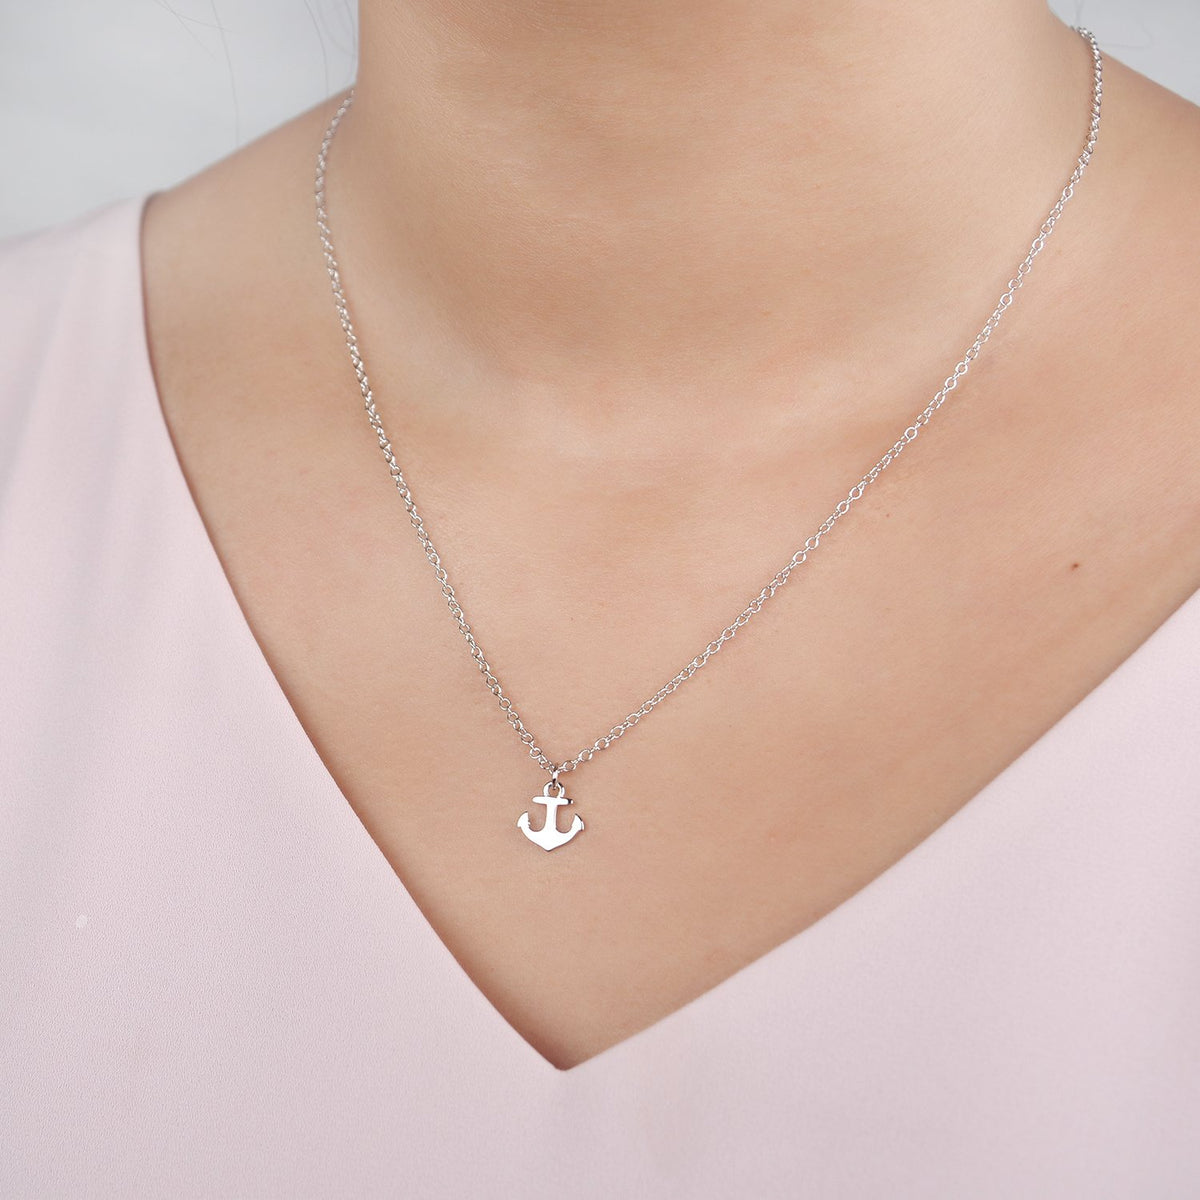 Best Friends Necklace - Dear Ava, Jewelry / Necklaces / Pendants